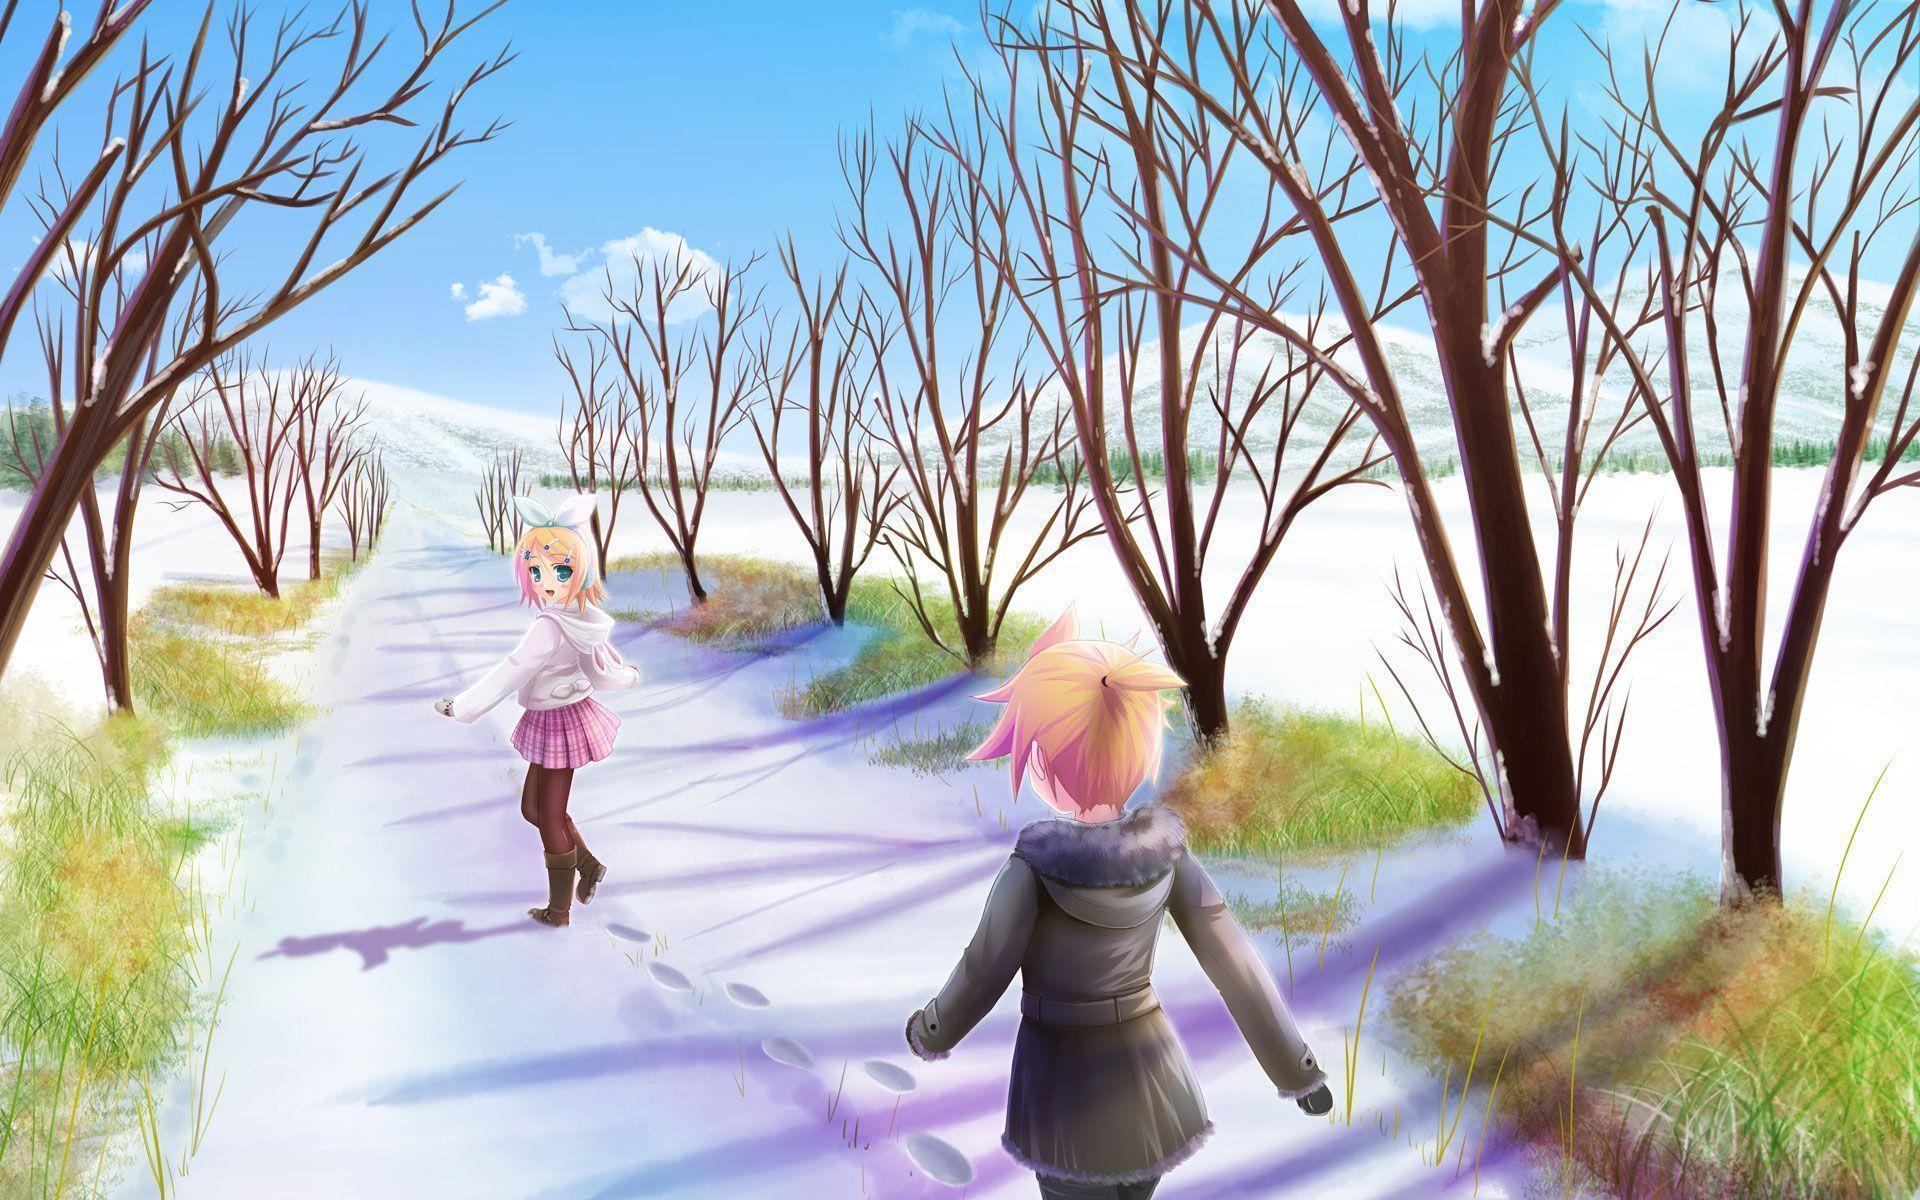 The beautiful Snow childhood anime wallpaper comics desktop